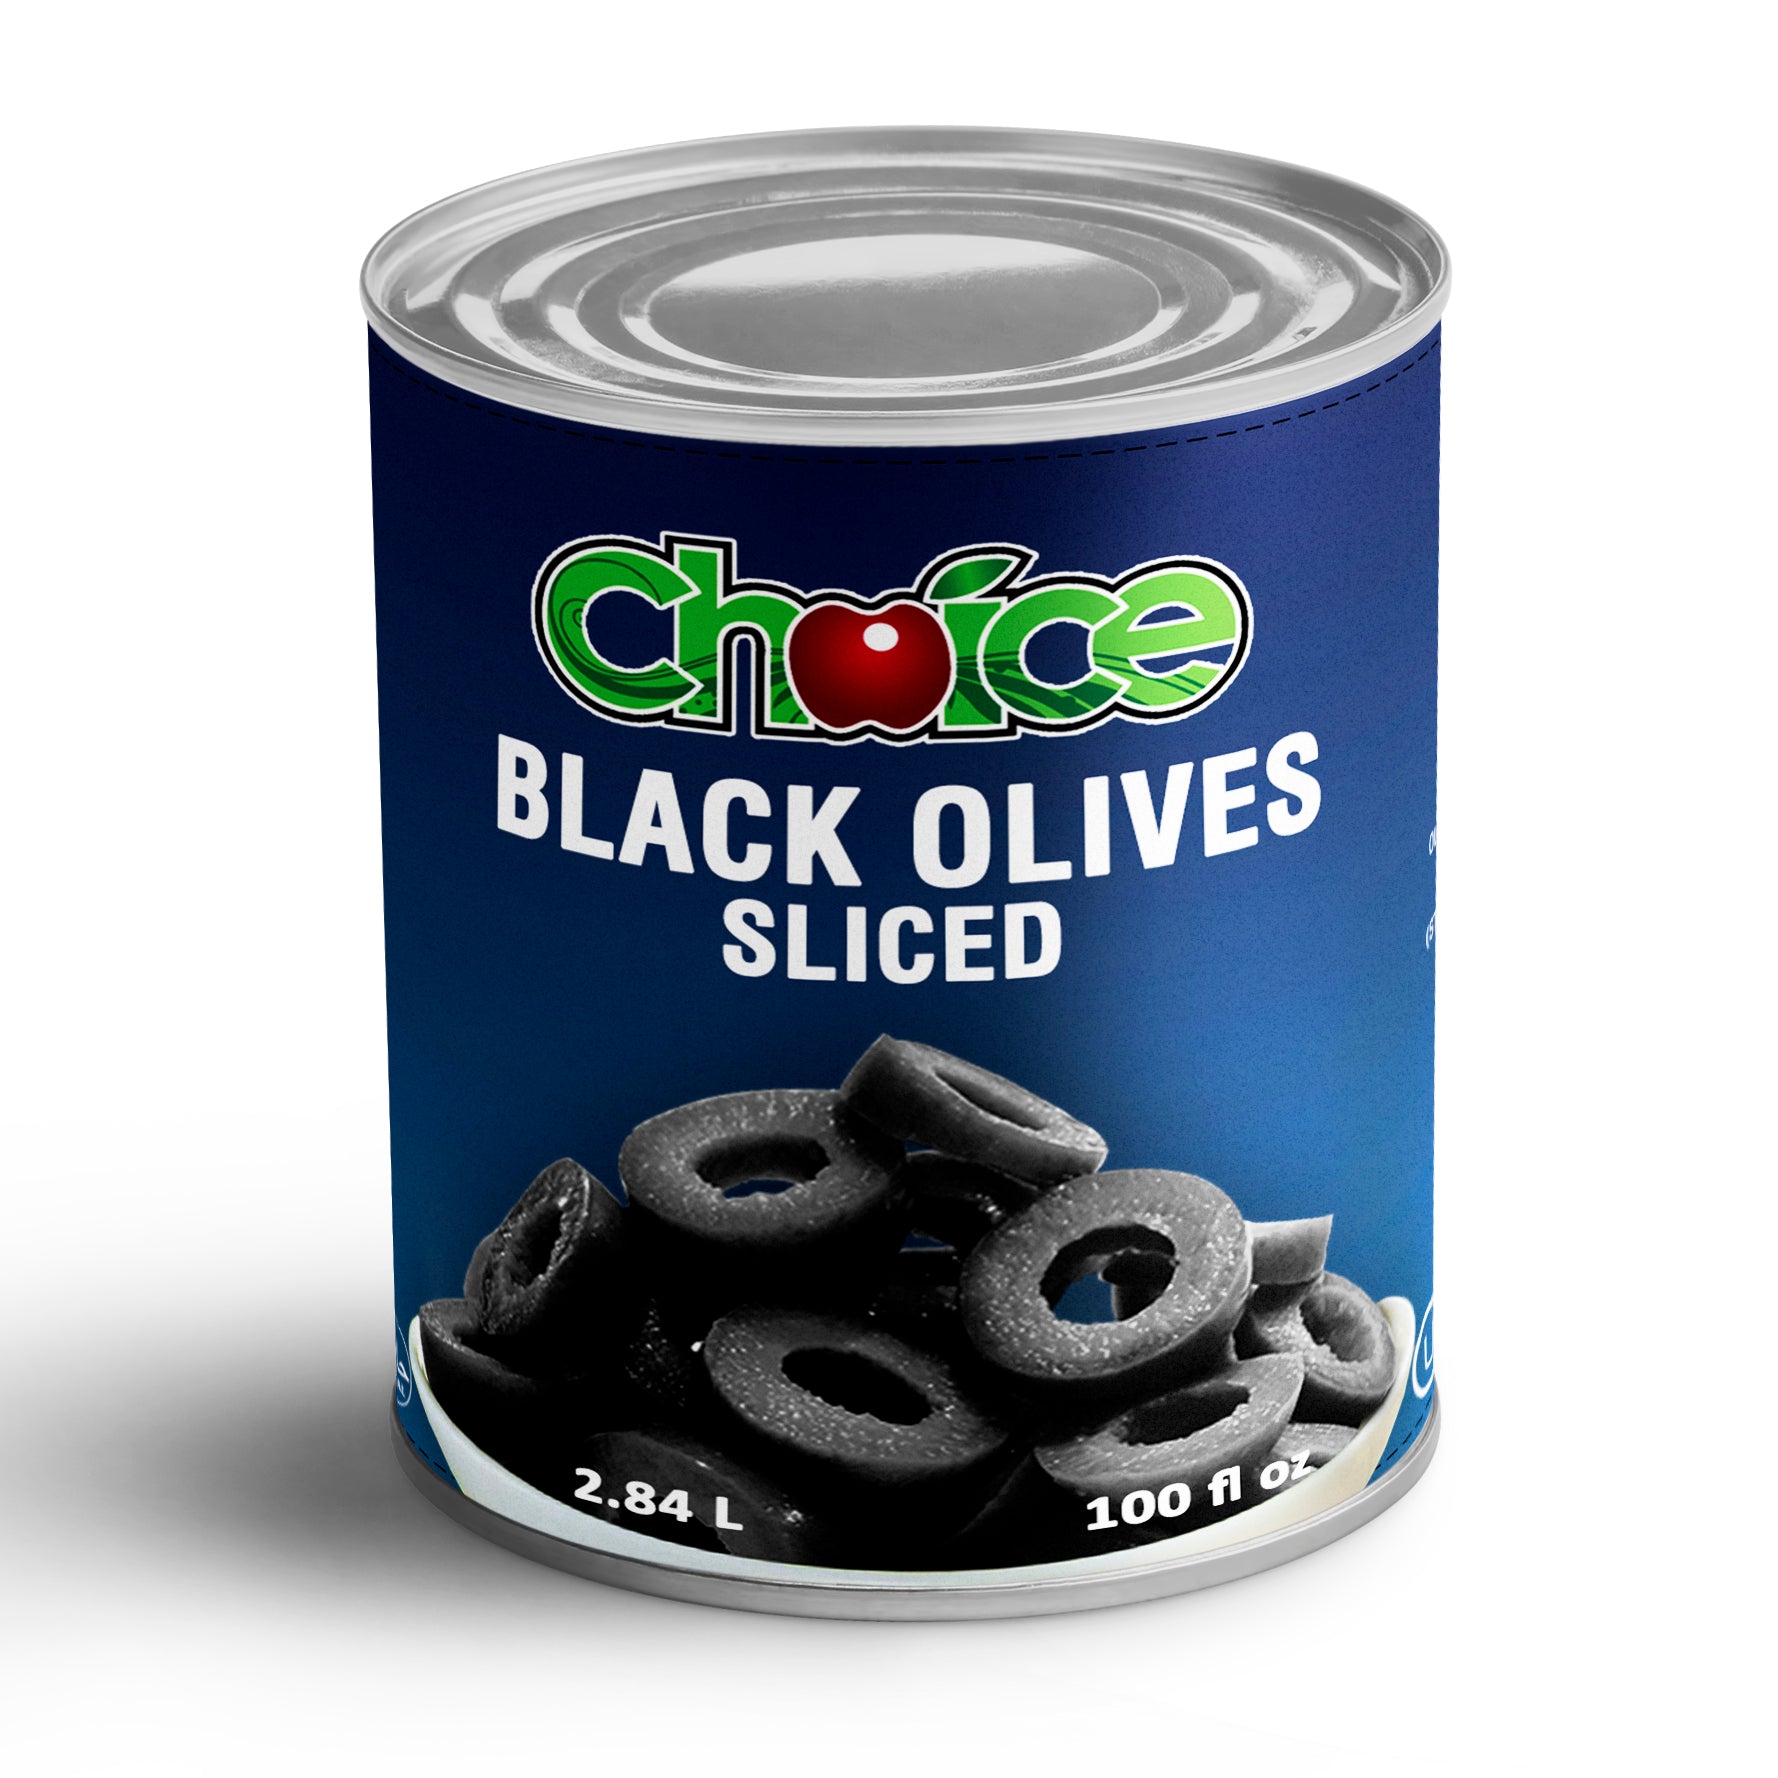 Chef's Choice/Fresco - Black Olives - Sliced